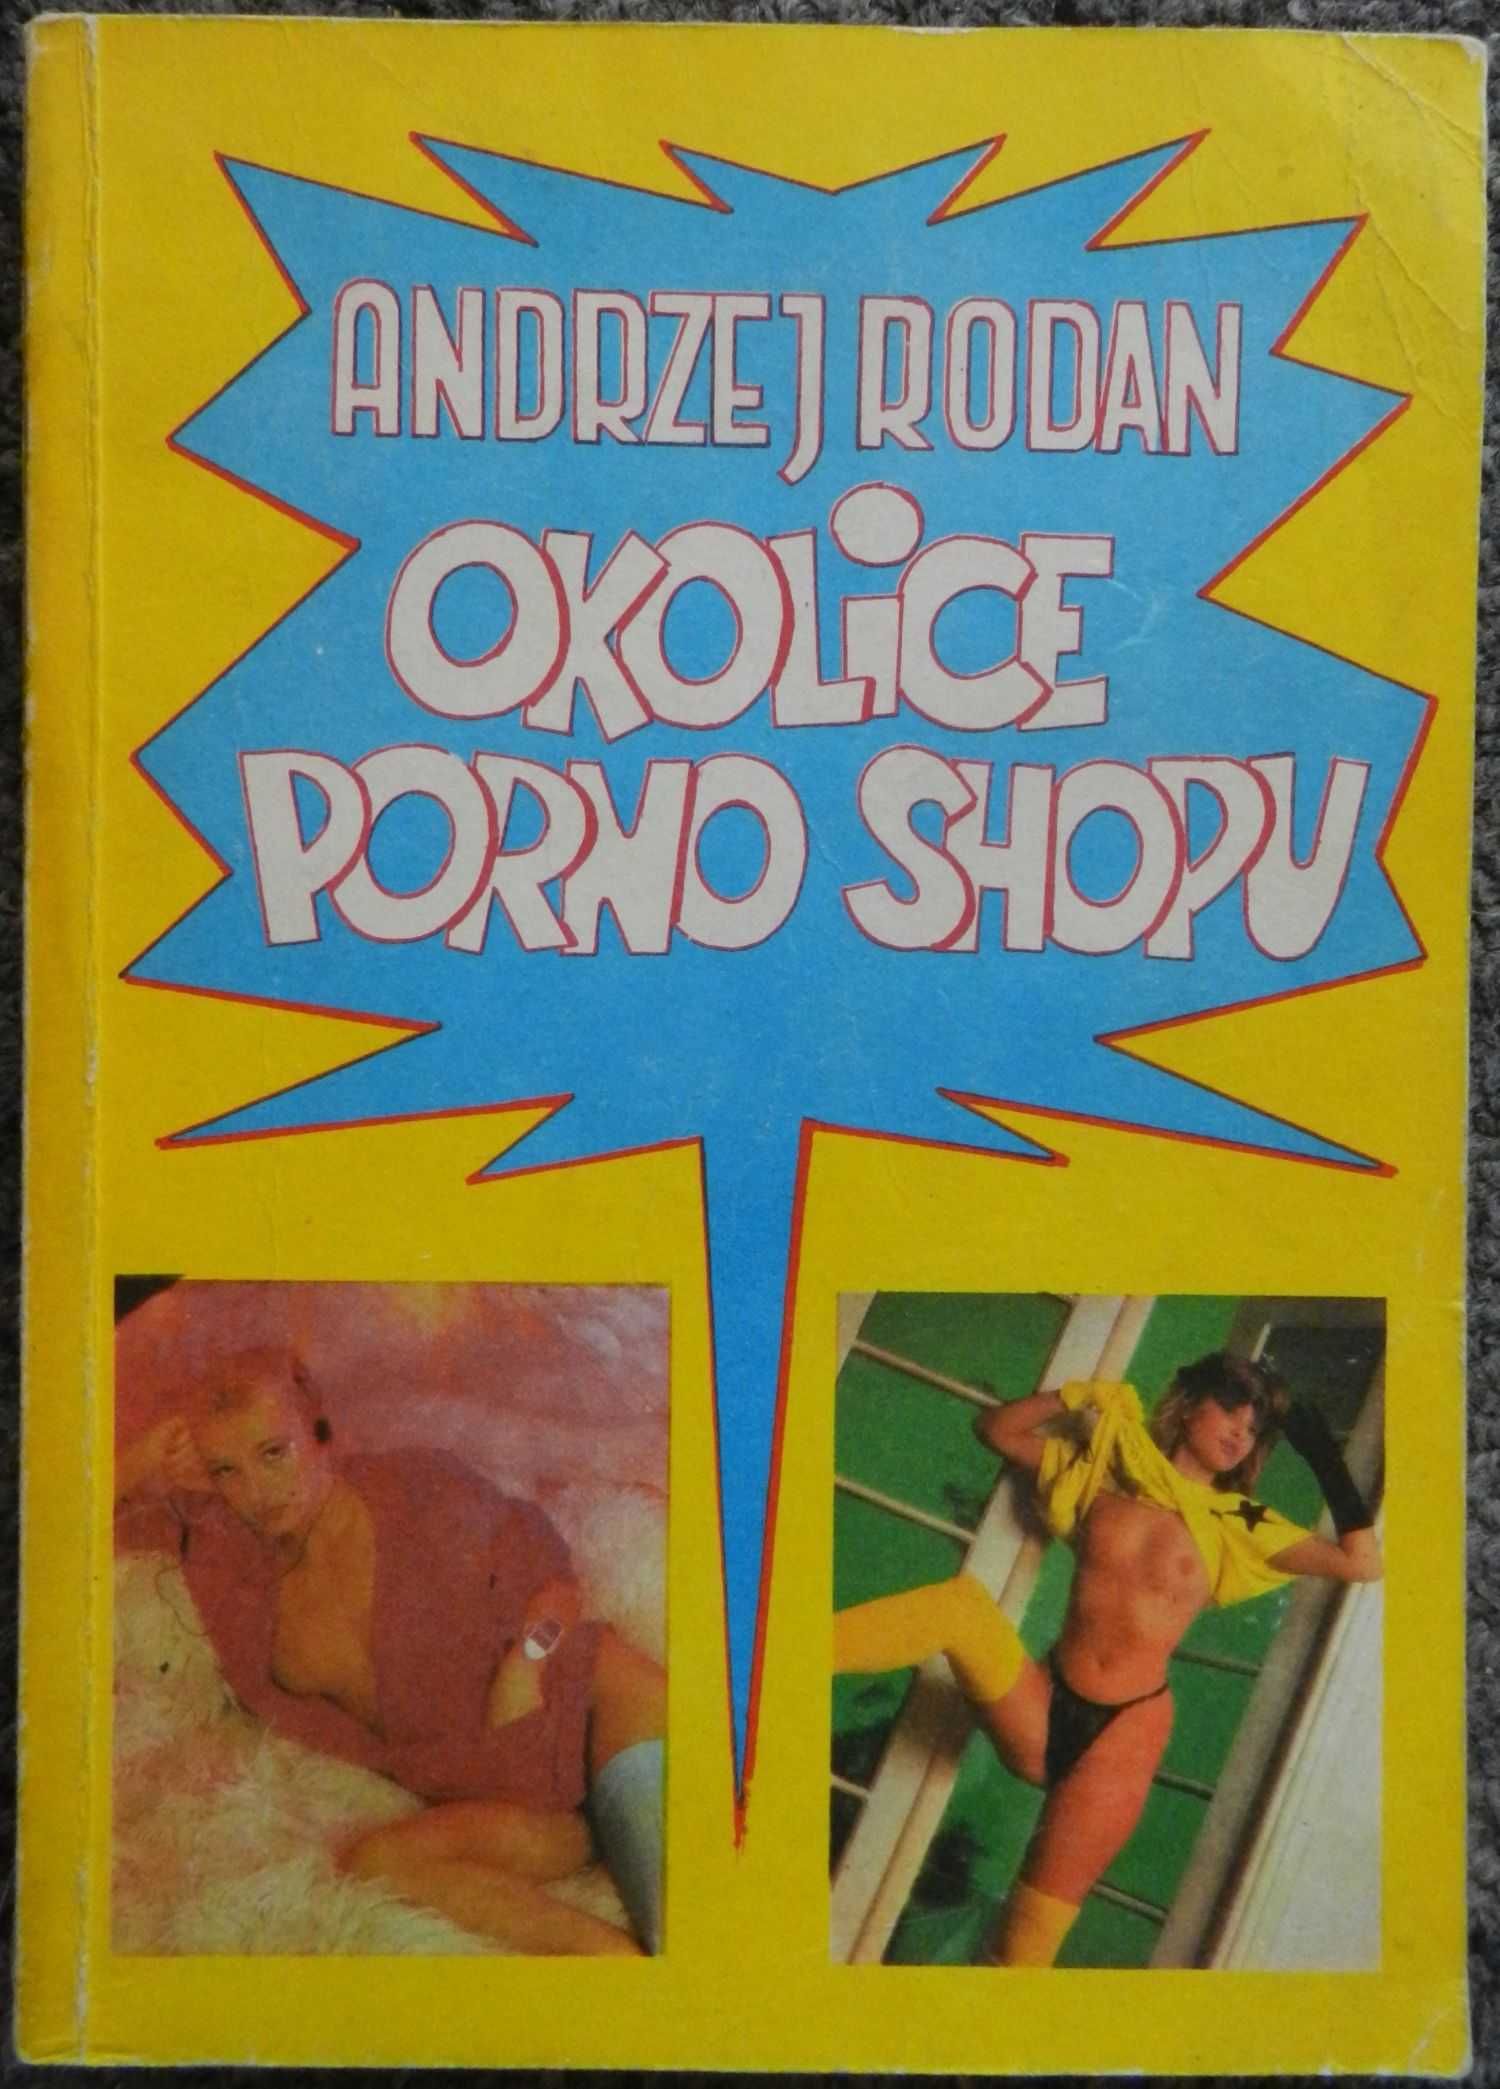 Rodan Andrzej - Okolice porno shopu